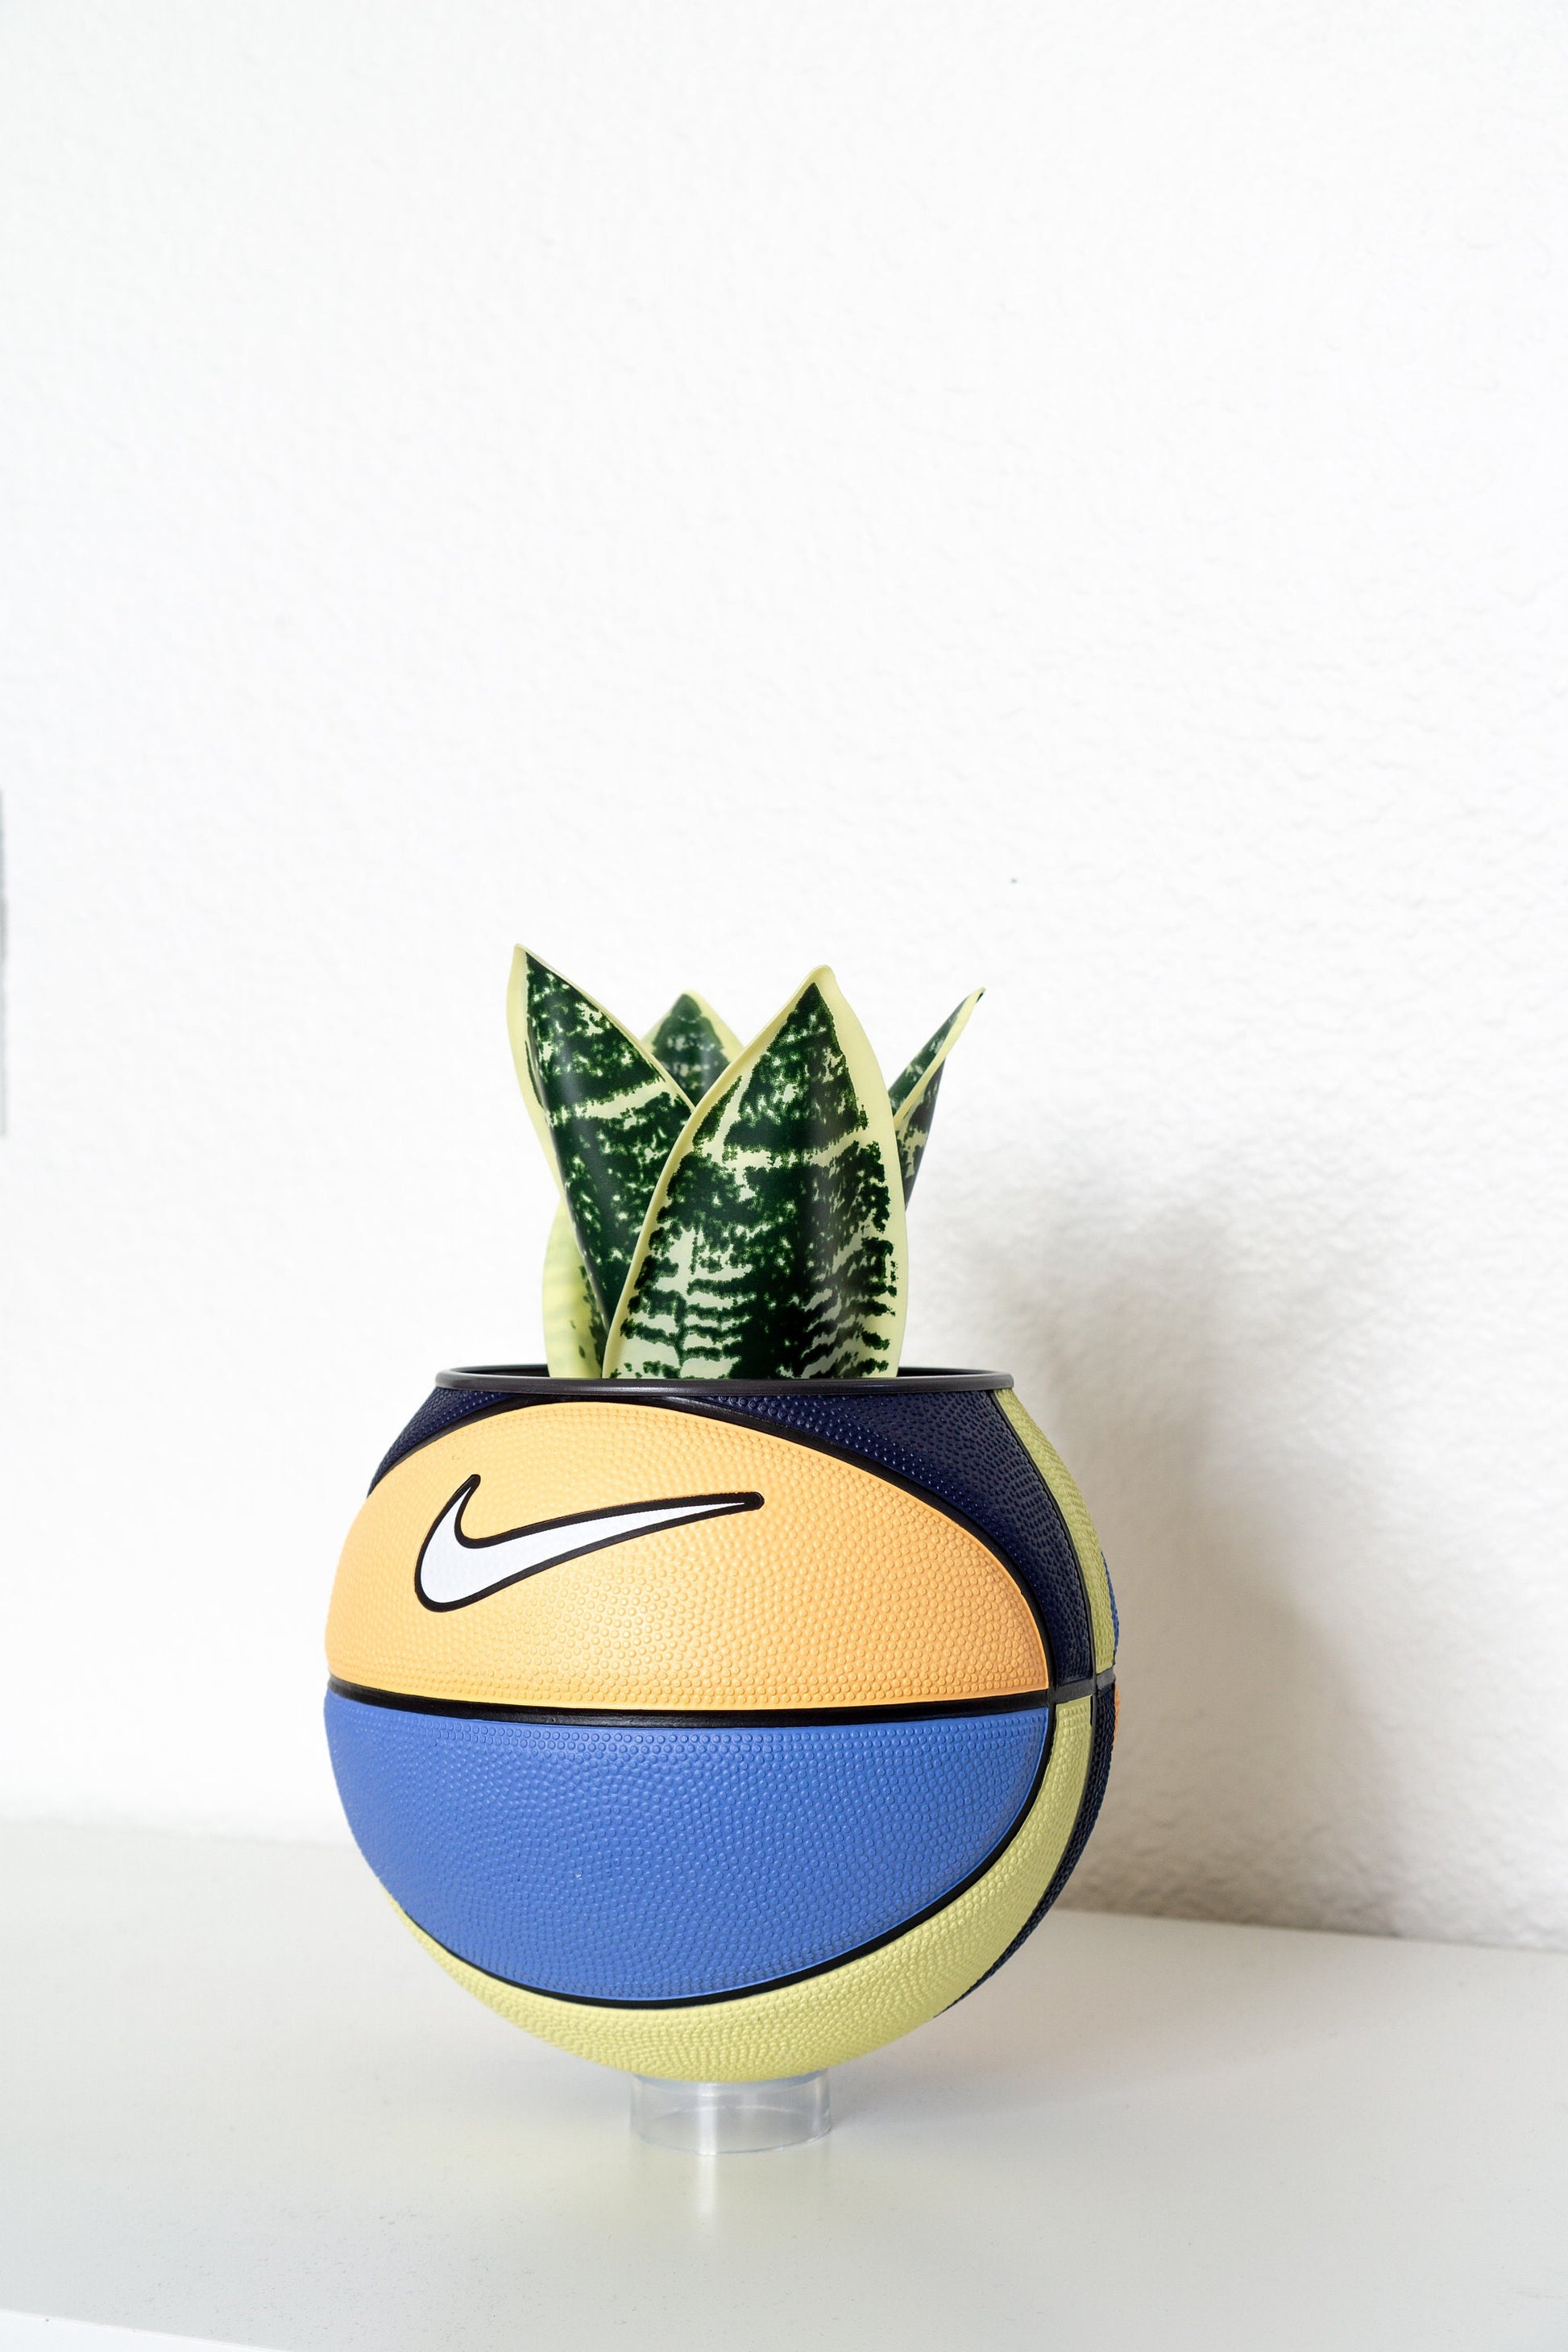 plntrs - Nike Swoosh Polar Melon Skills Mini Basketball Planter - new ball with stand